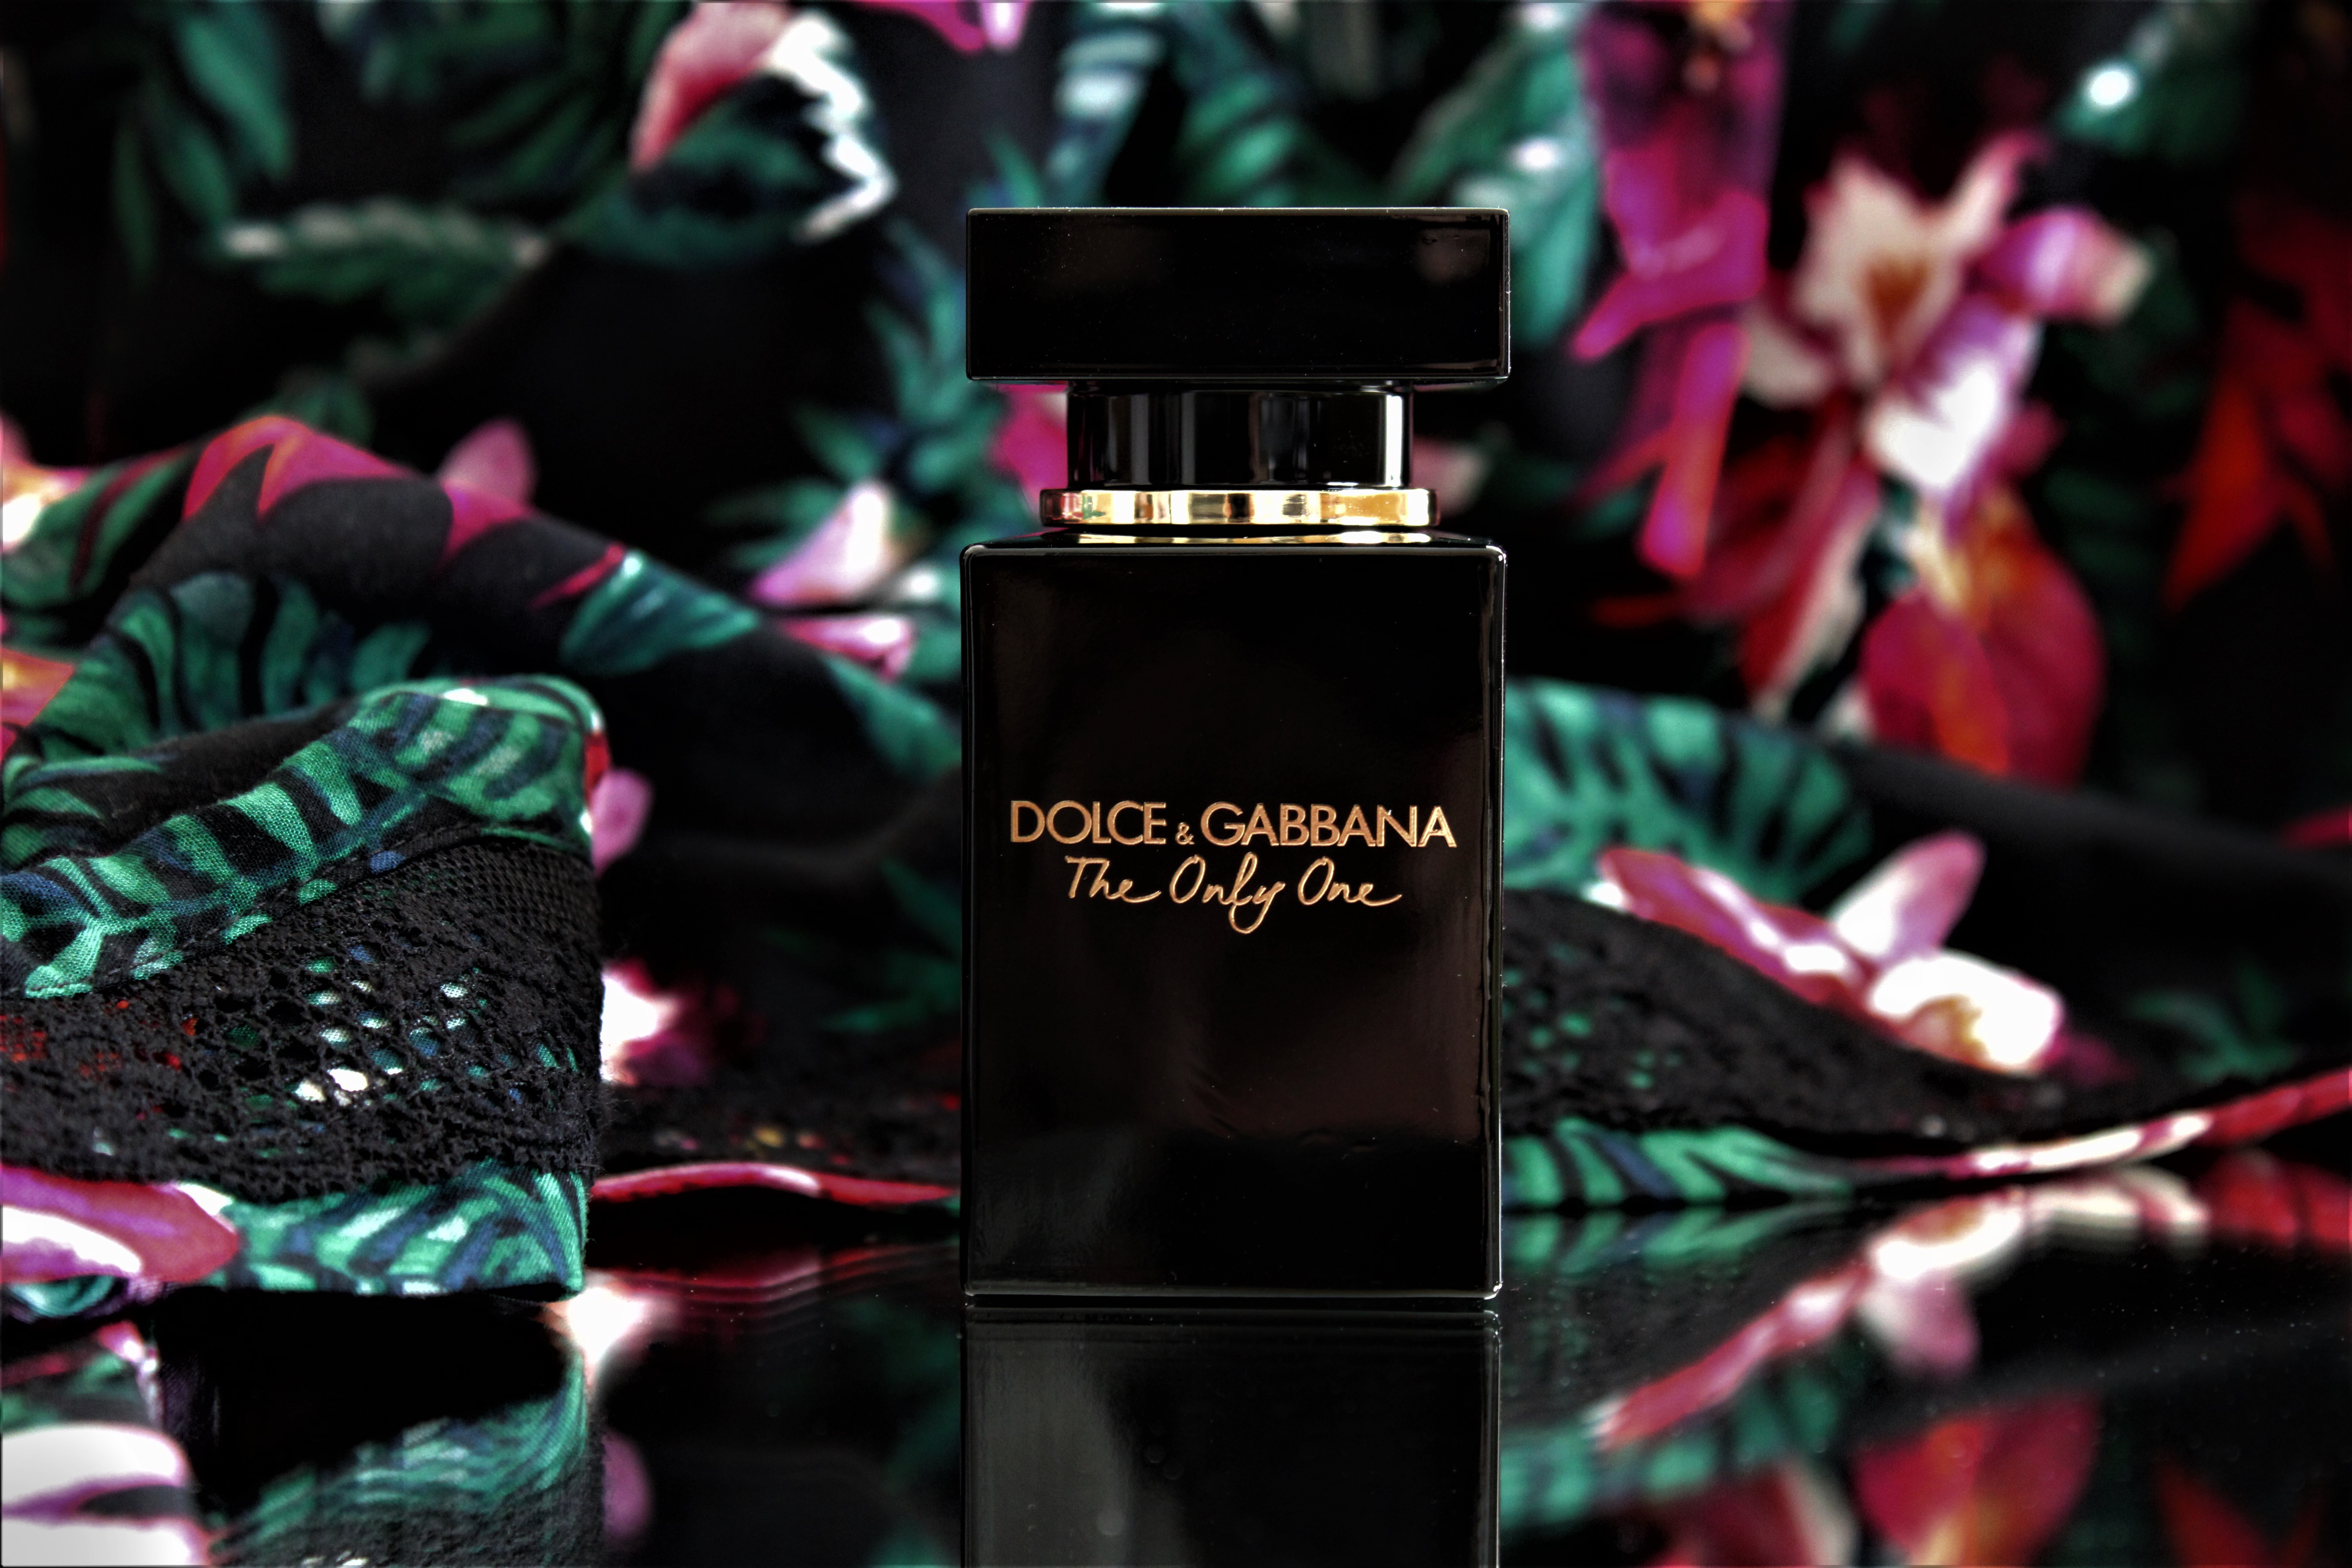 Dolce gabbana intense купить. Dolce Gabbana the only one EDP intense. The only one Eau de Parfum intense Dolce&Gabbana. Dolce Gabbana intense. Дольче Габбана Парфюм Интенс женские.